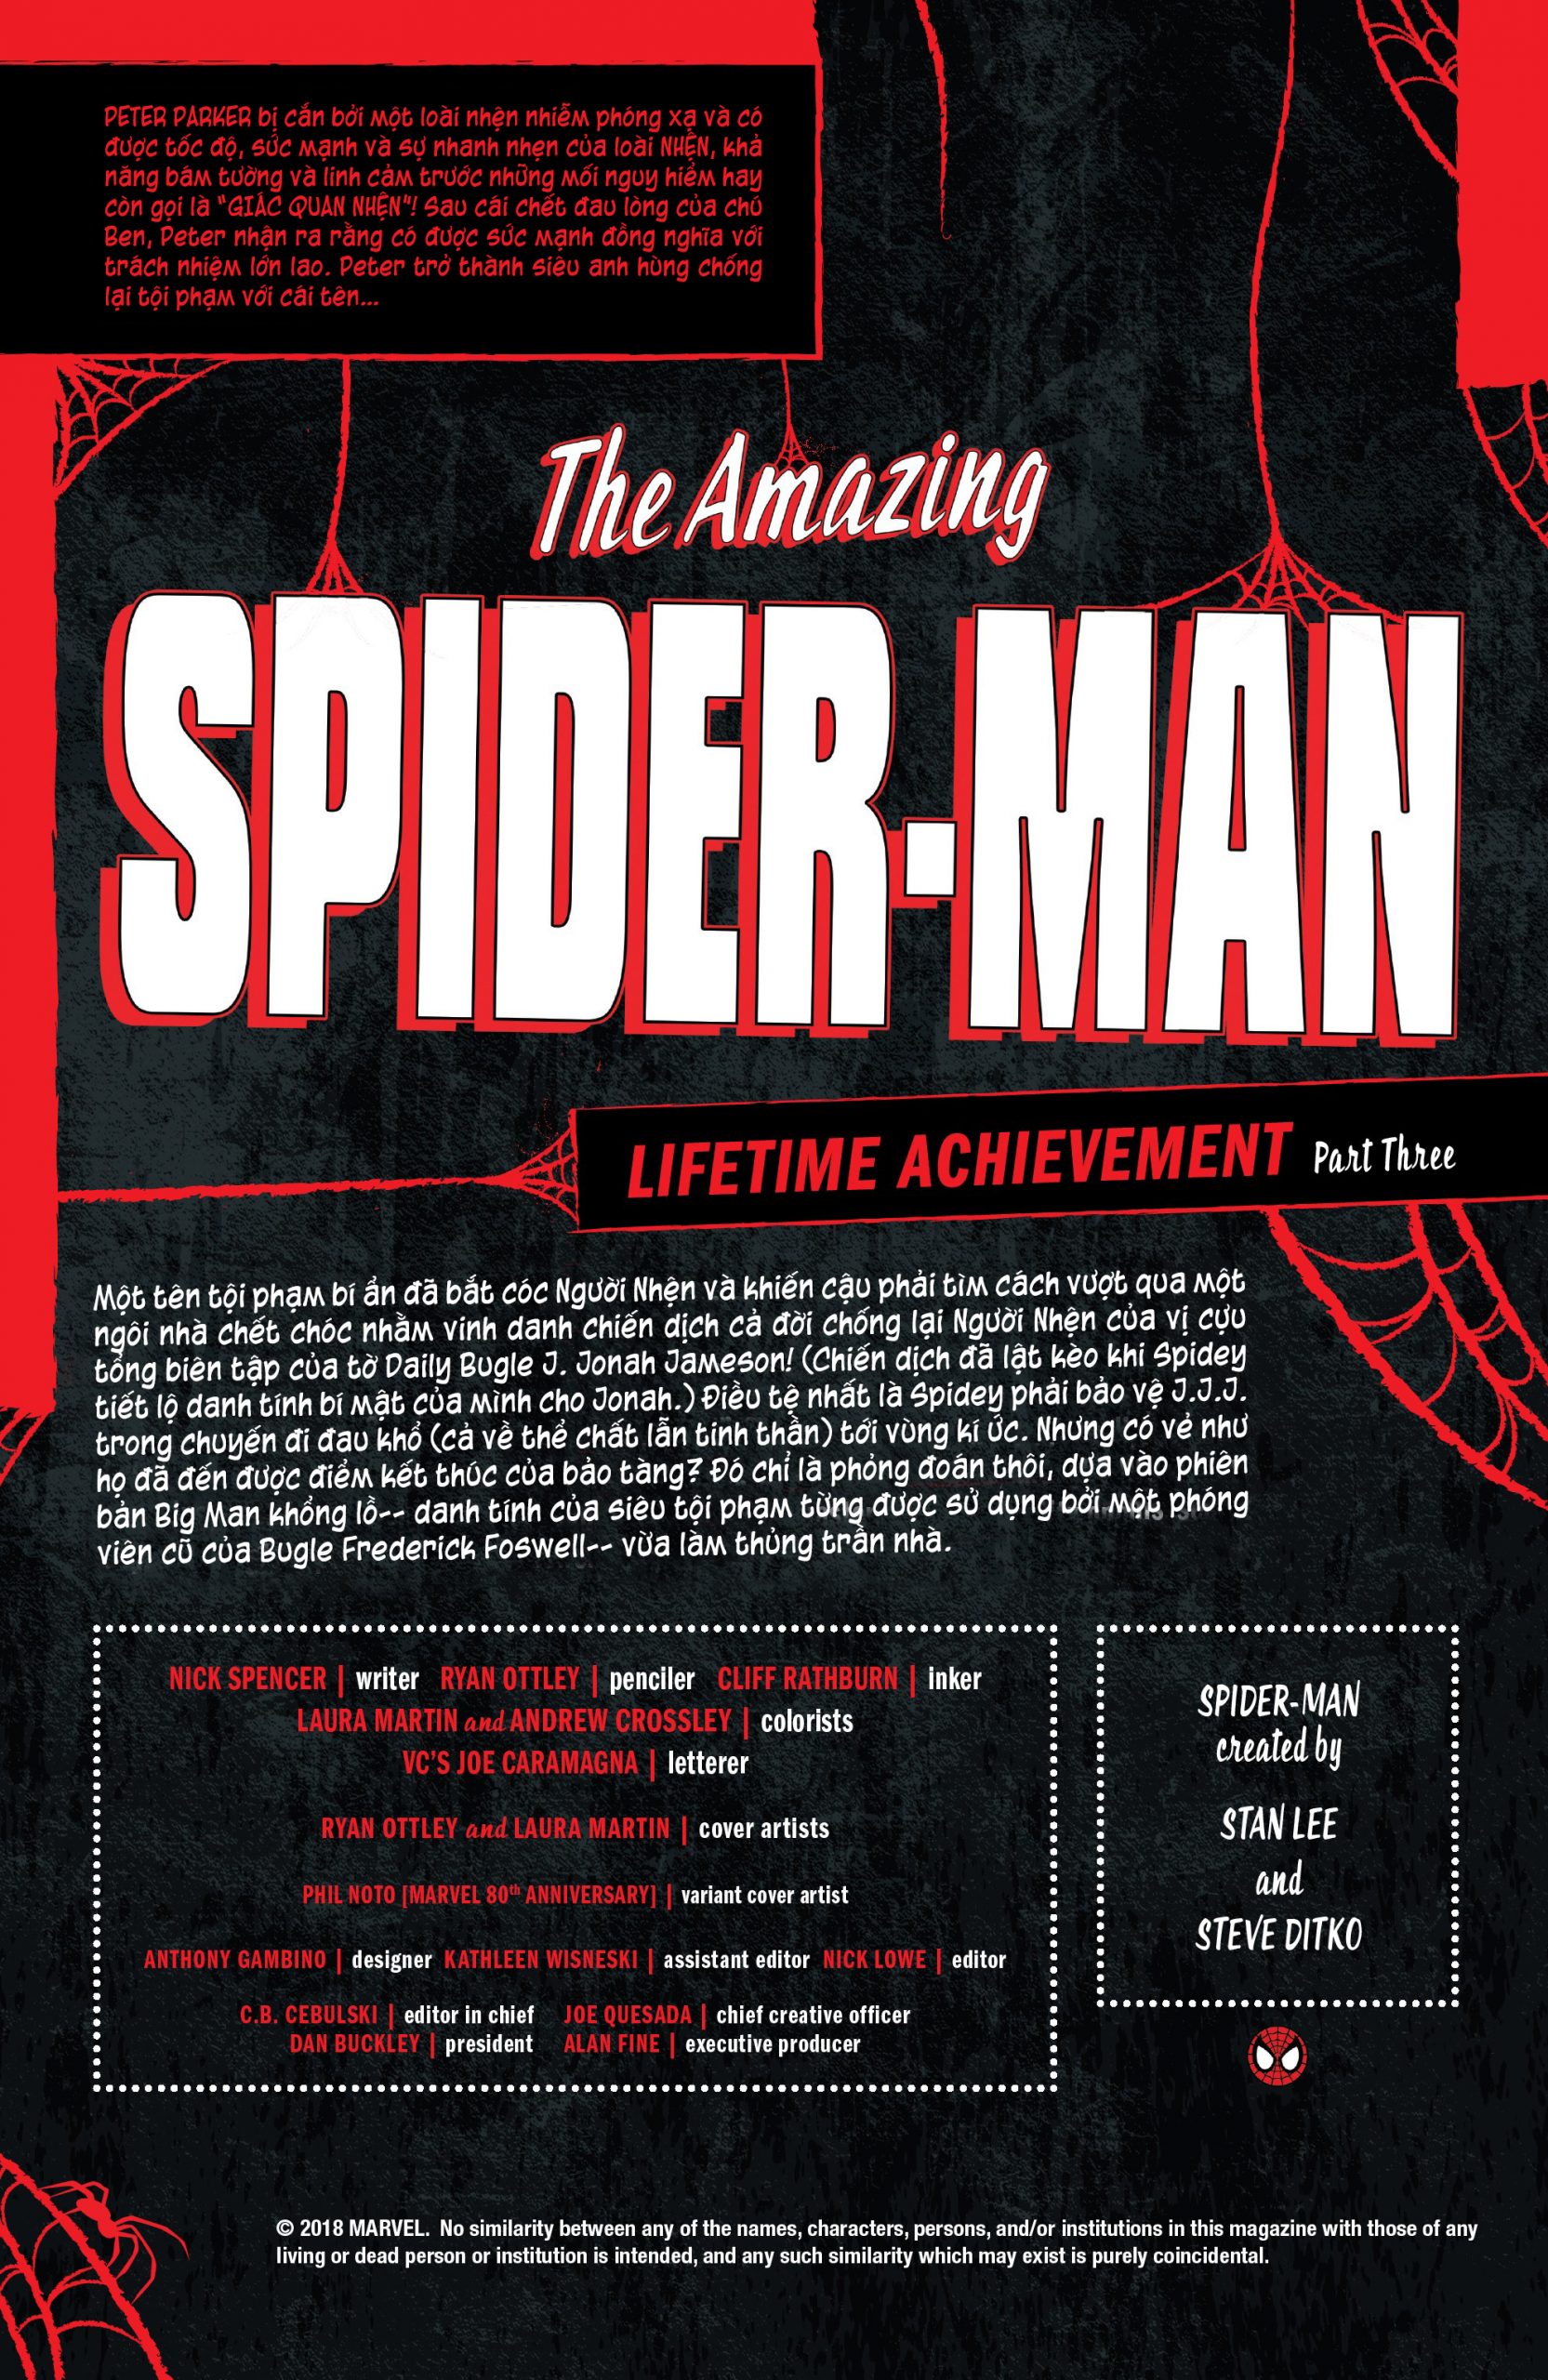 https://langgeek.net/wp-content/webpc-passthru.php?src=https://langgeek.net/wp-content/uploads/2021/12/Amazing-Spider-Man-013-002-scaled.jpg&nocache=1